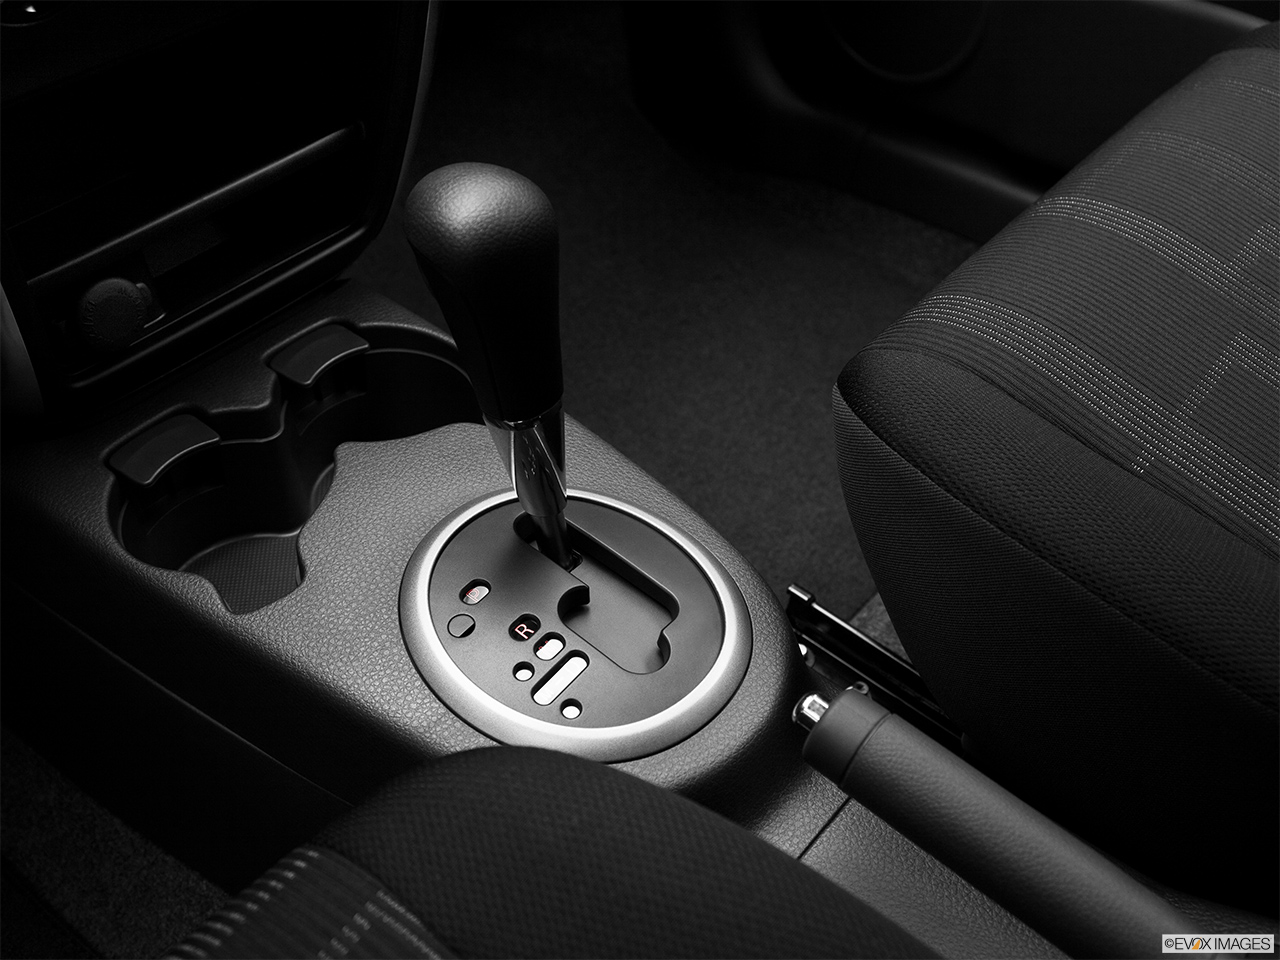 2011 Suzuki SX4 Sportback Technology Gear shifter/center console. 